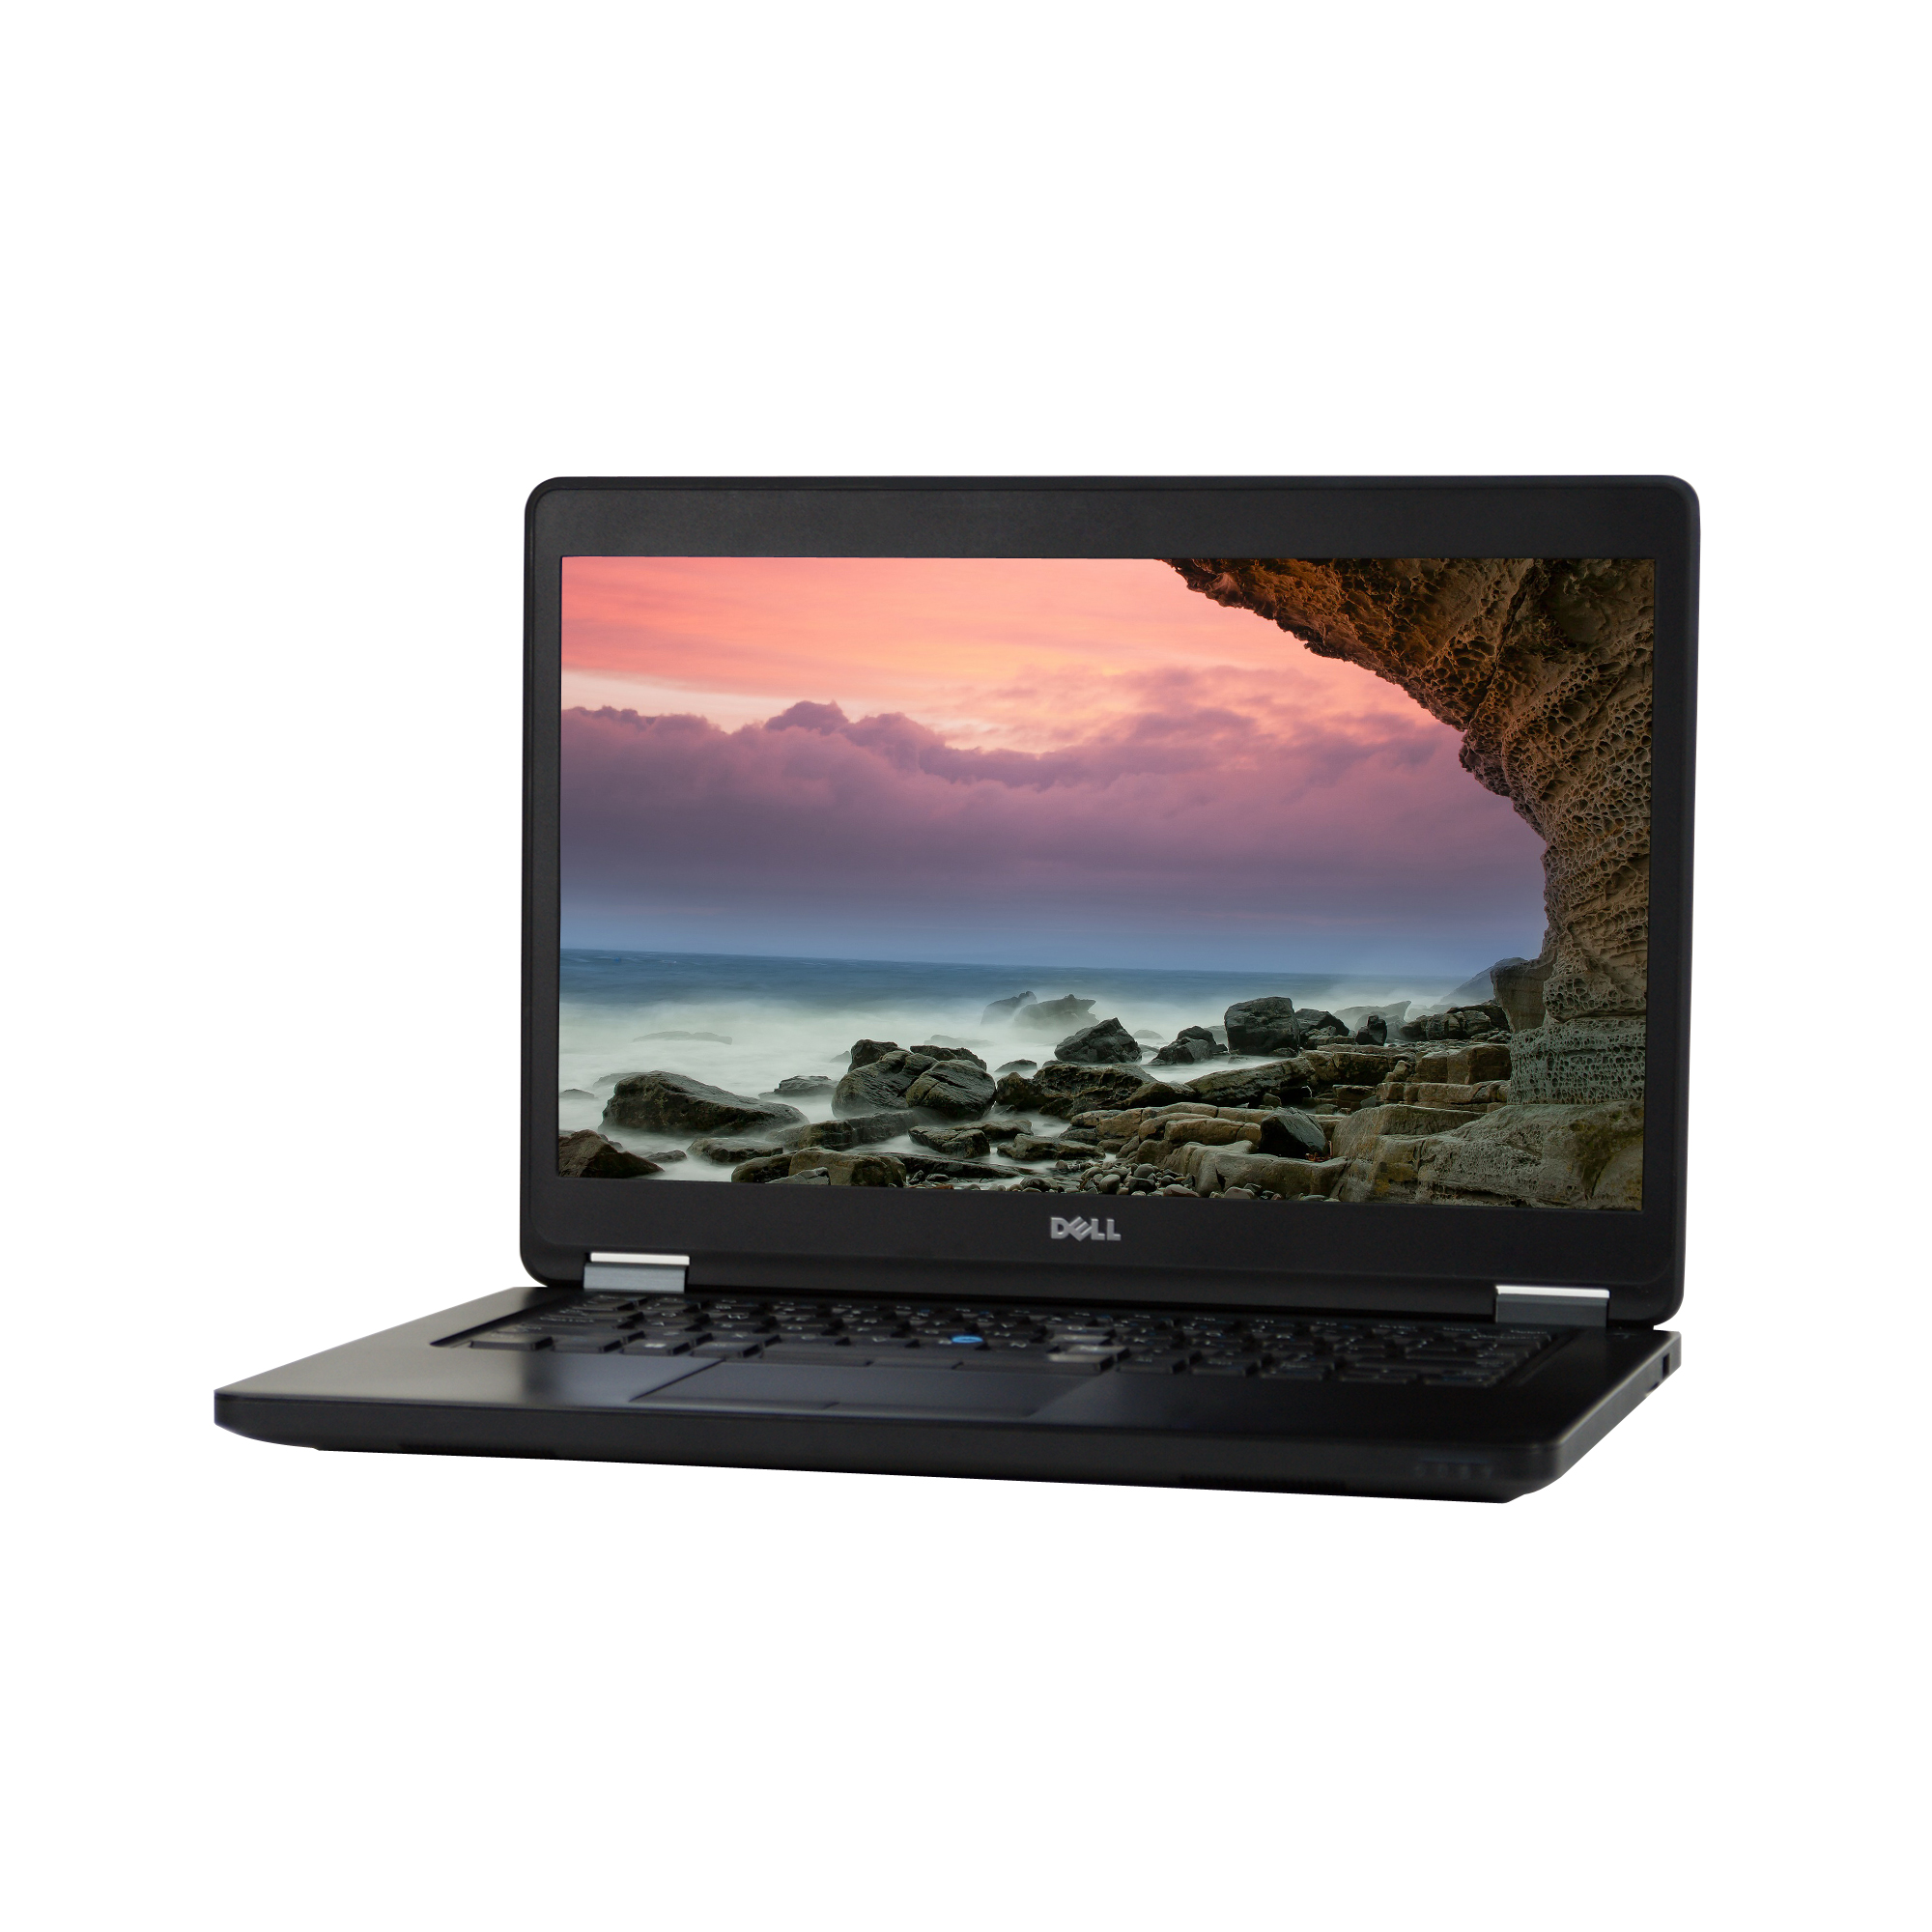 Restored Dell E5450 Laptop, 14'', Intel Core i5-5300U 2.3GHz Processor, 8GB Memory, 1TB Hard Drive, Windows 10 Pro 64-bit, WA5-31194 (Refurbished) - image 1 of 4